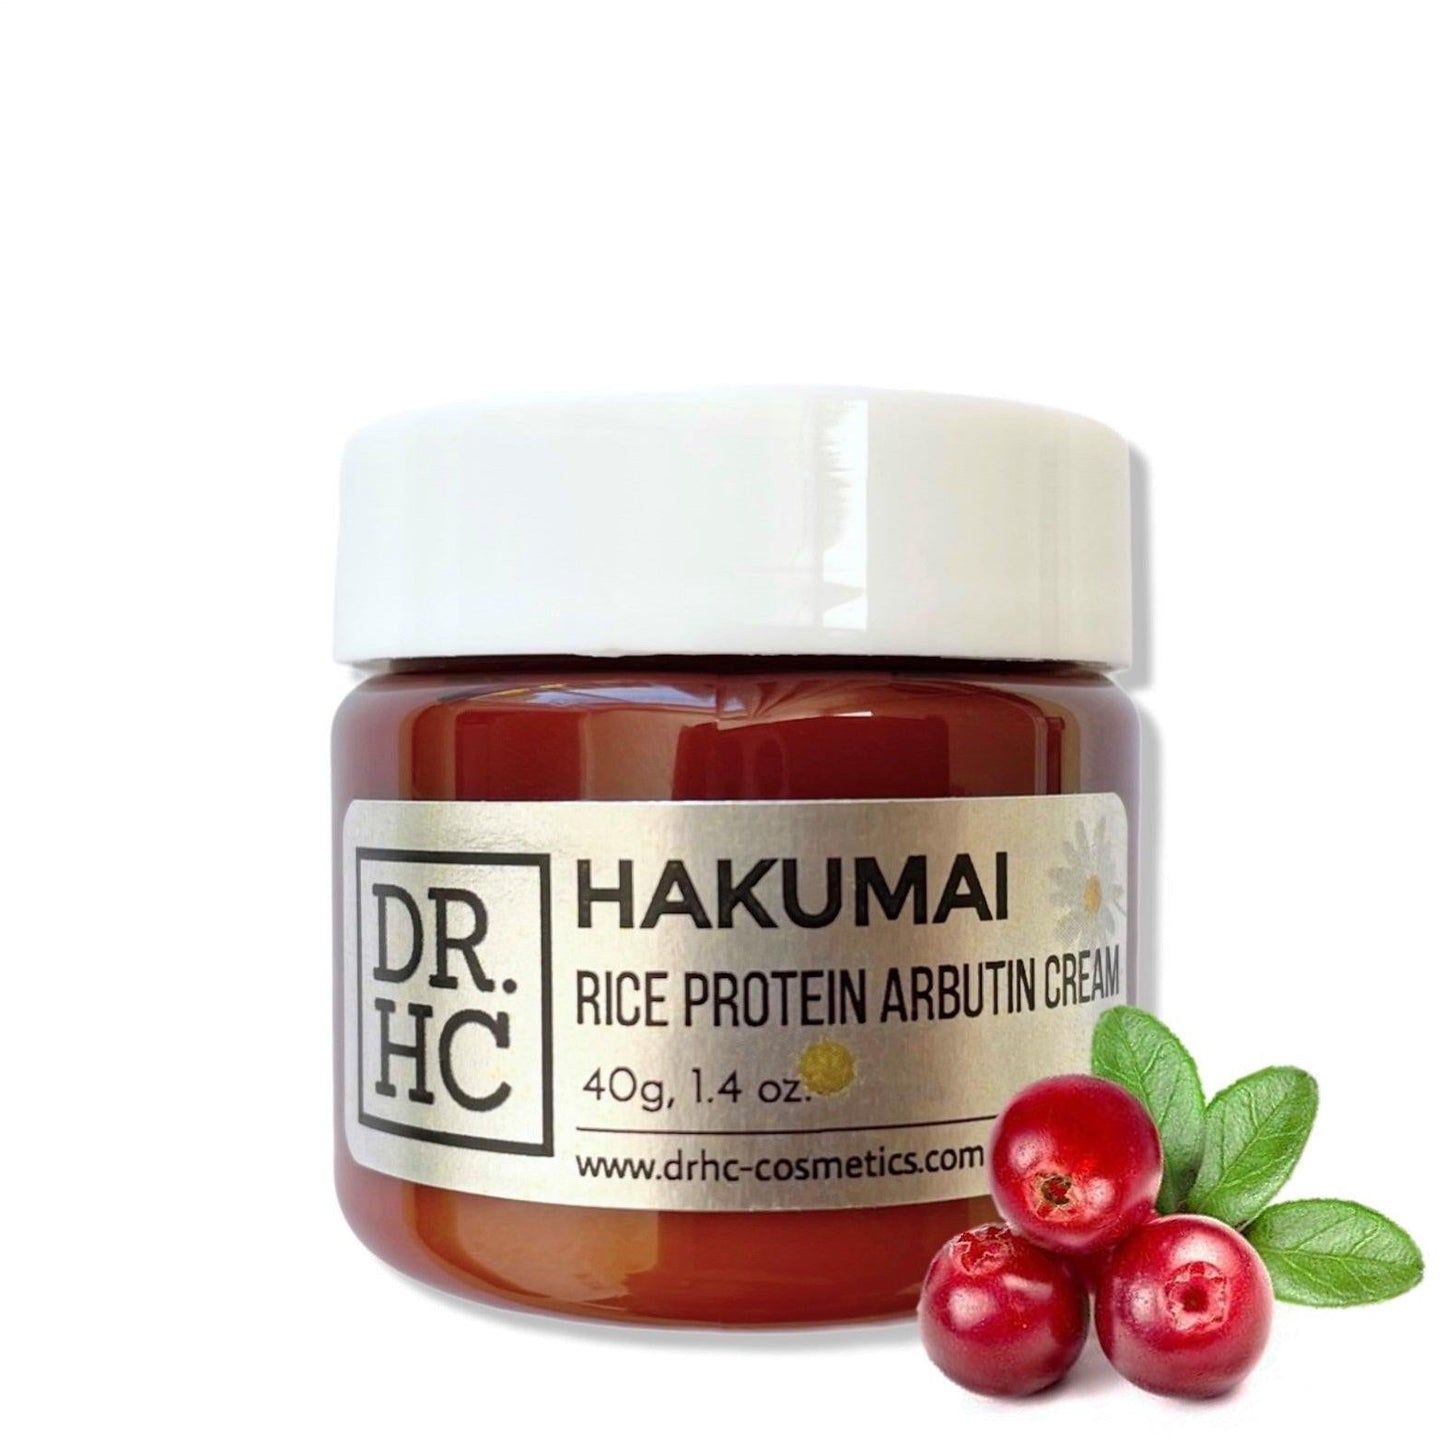 DR.HC Hakumai Rice Protein Arbutin Cream (25~40g, 0.9~1.4oz) (Skin brightening, Anti-acne, Anti-blemish, Anti-aging...)-2